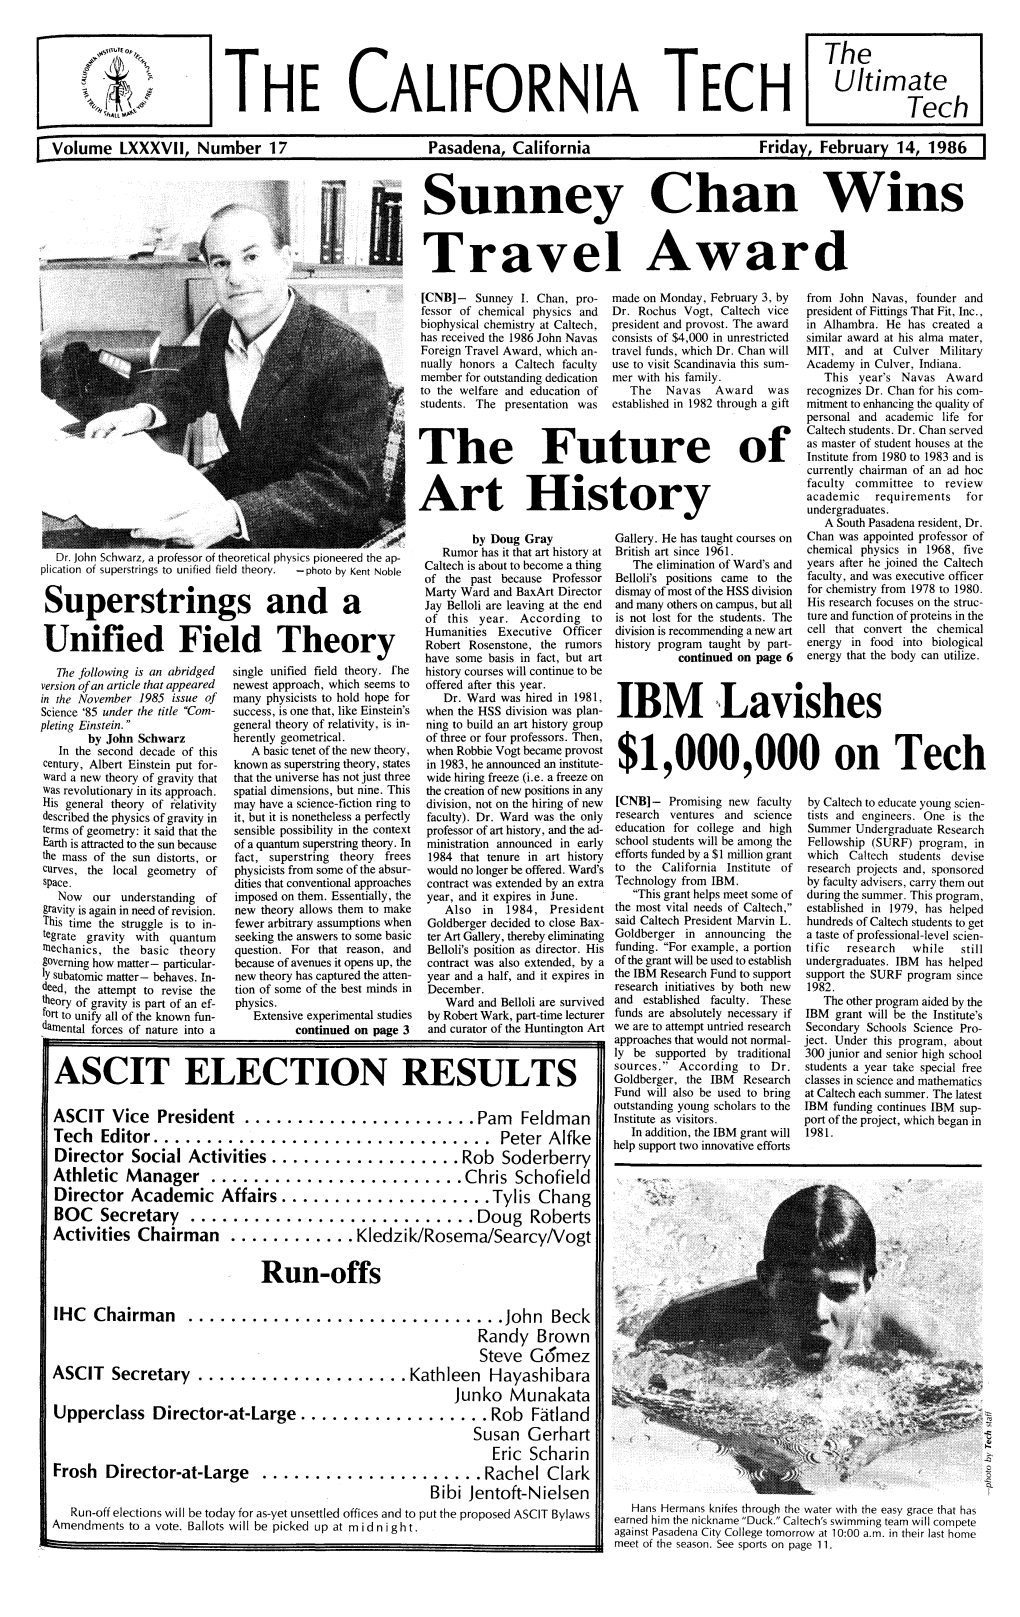 PDF (V.87:17, February 14, 1986)